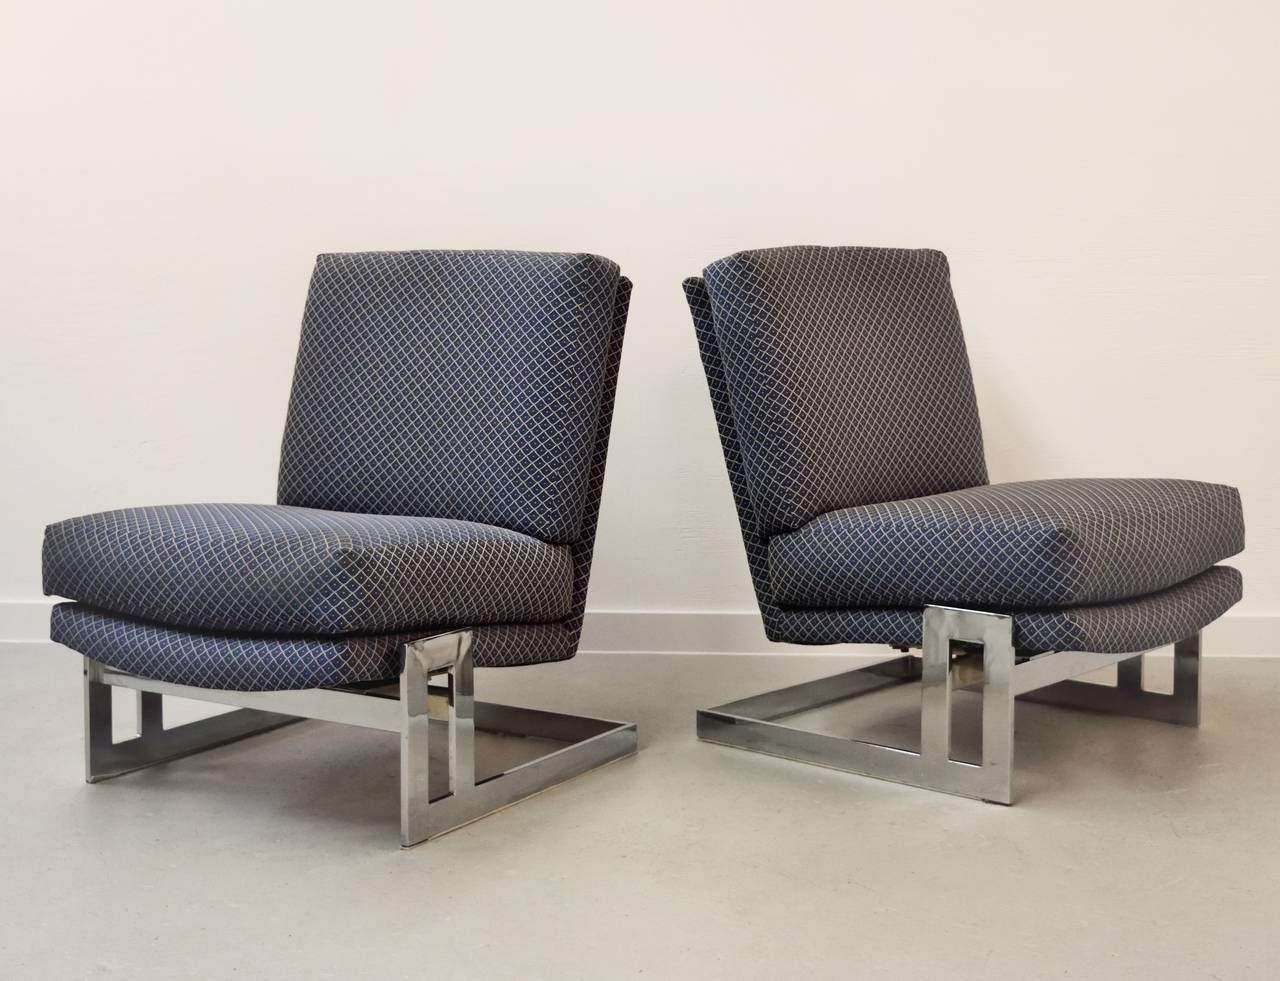 Pair of chrome framed Milo Baughman lounge chairs.